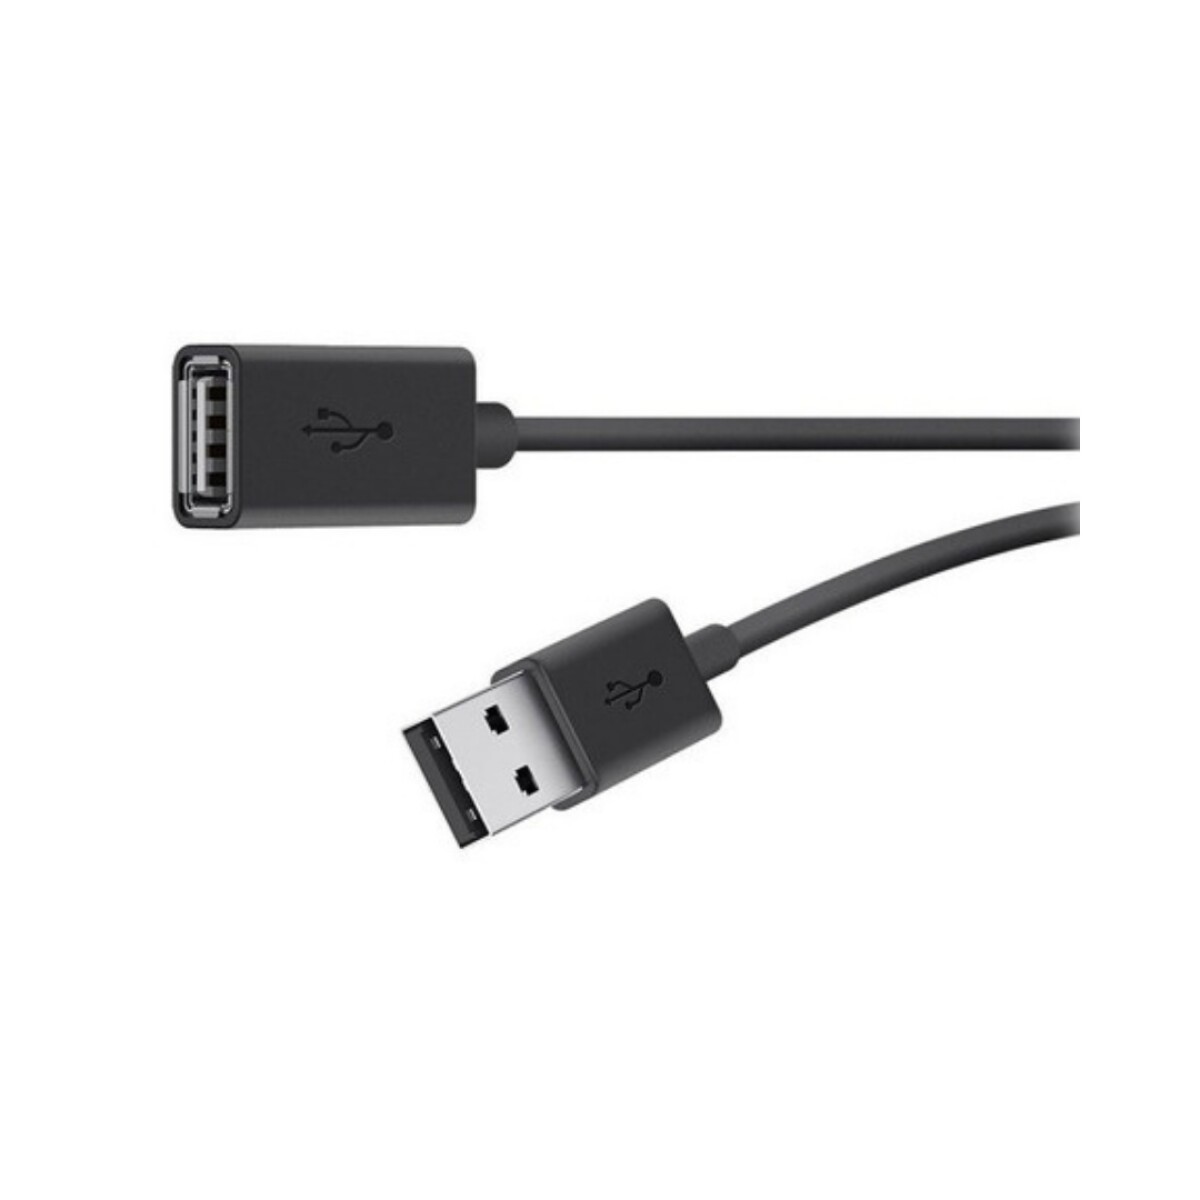 Cable Extensión Belkin USB Macho a USB Hembra 